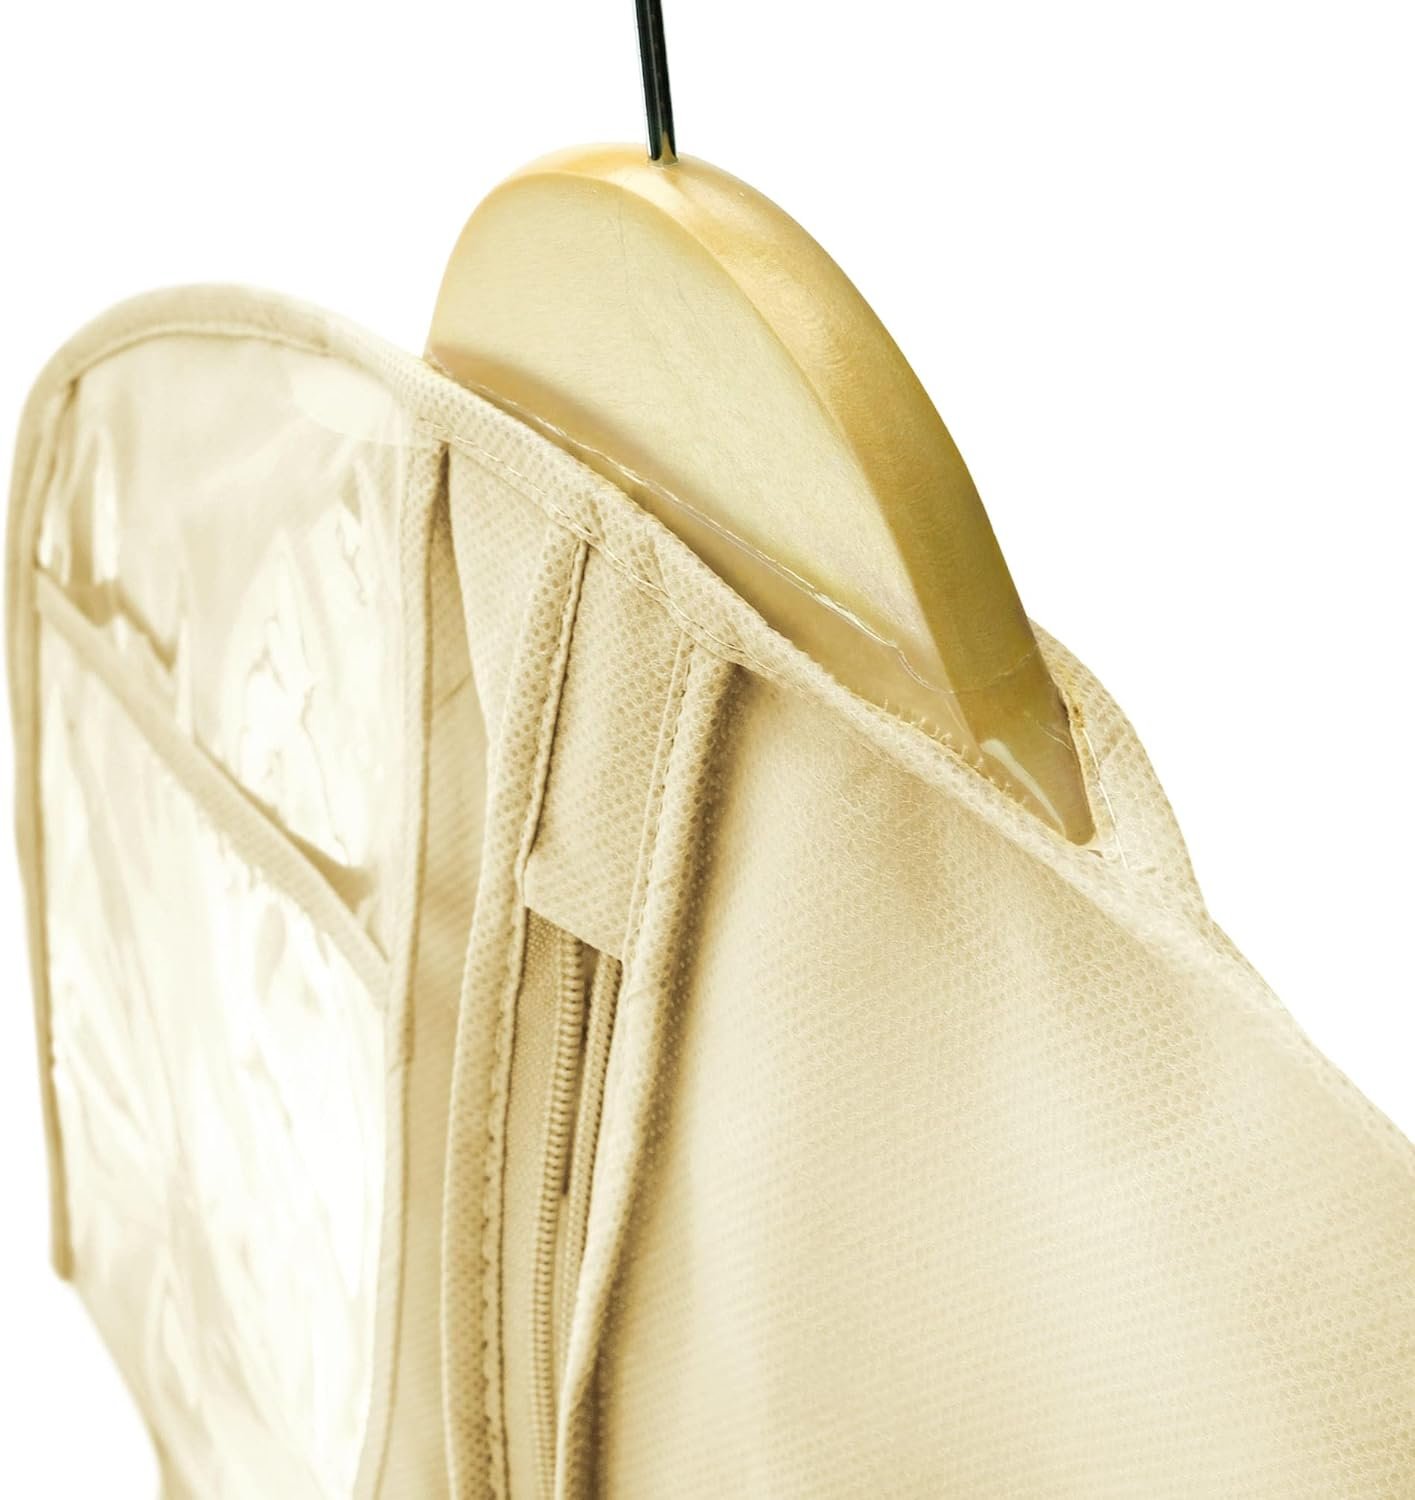 HANGERWORLD 72inch Breathable Wedding Gown Long Dress Hanging Garment Bag for Closet Storage (White)